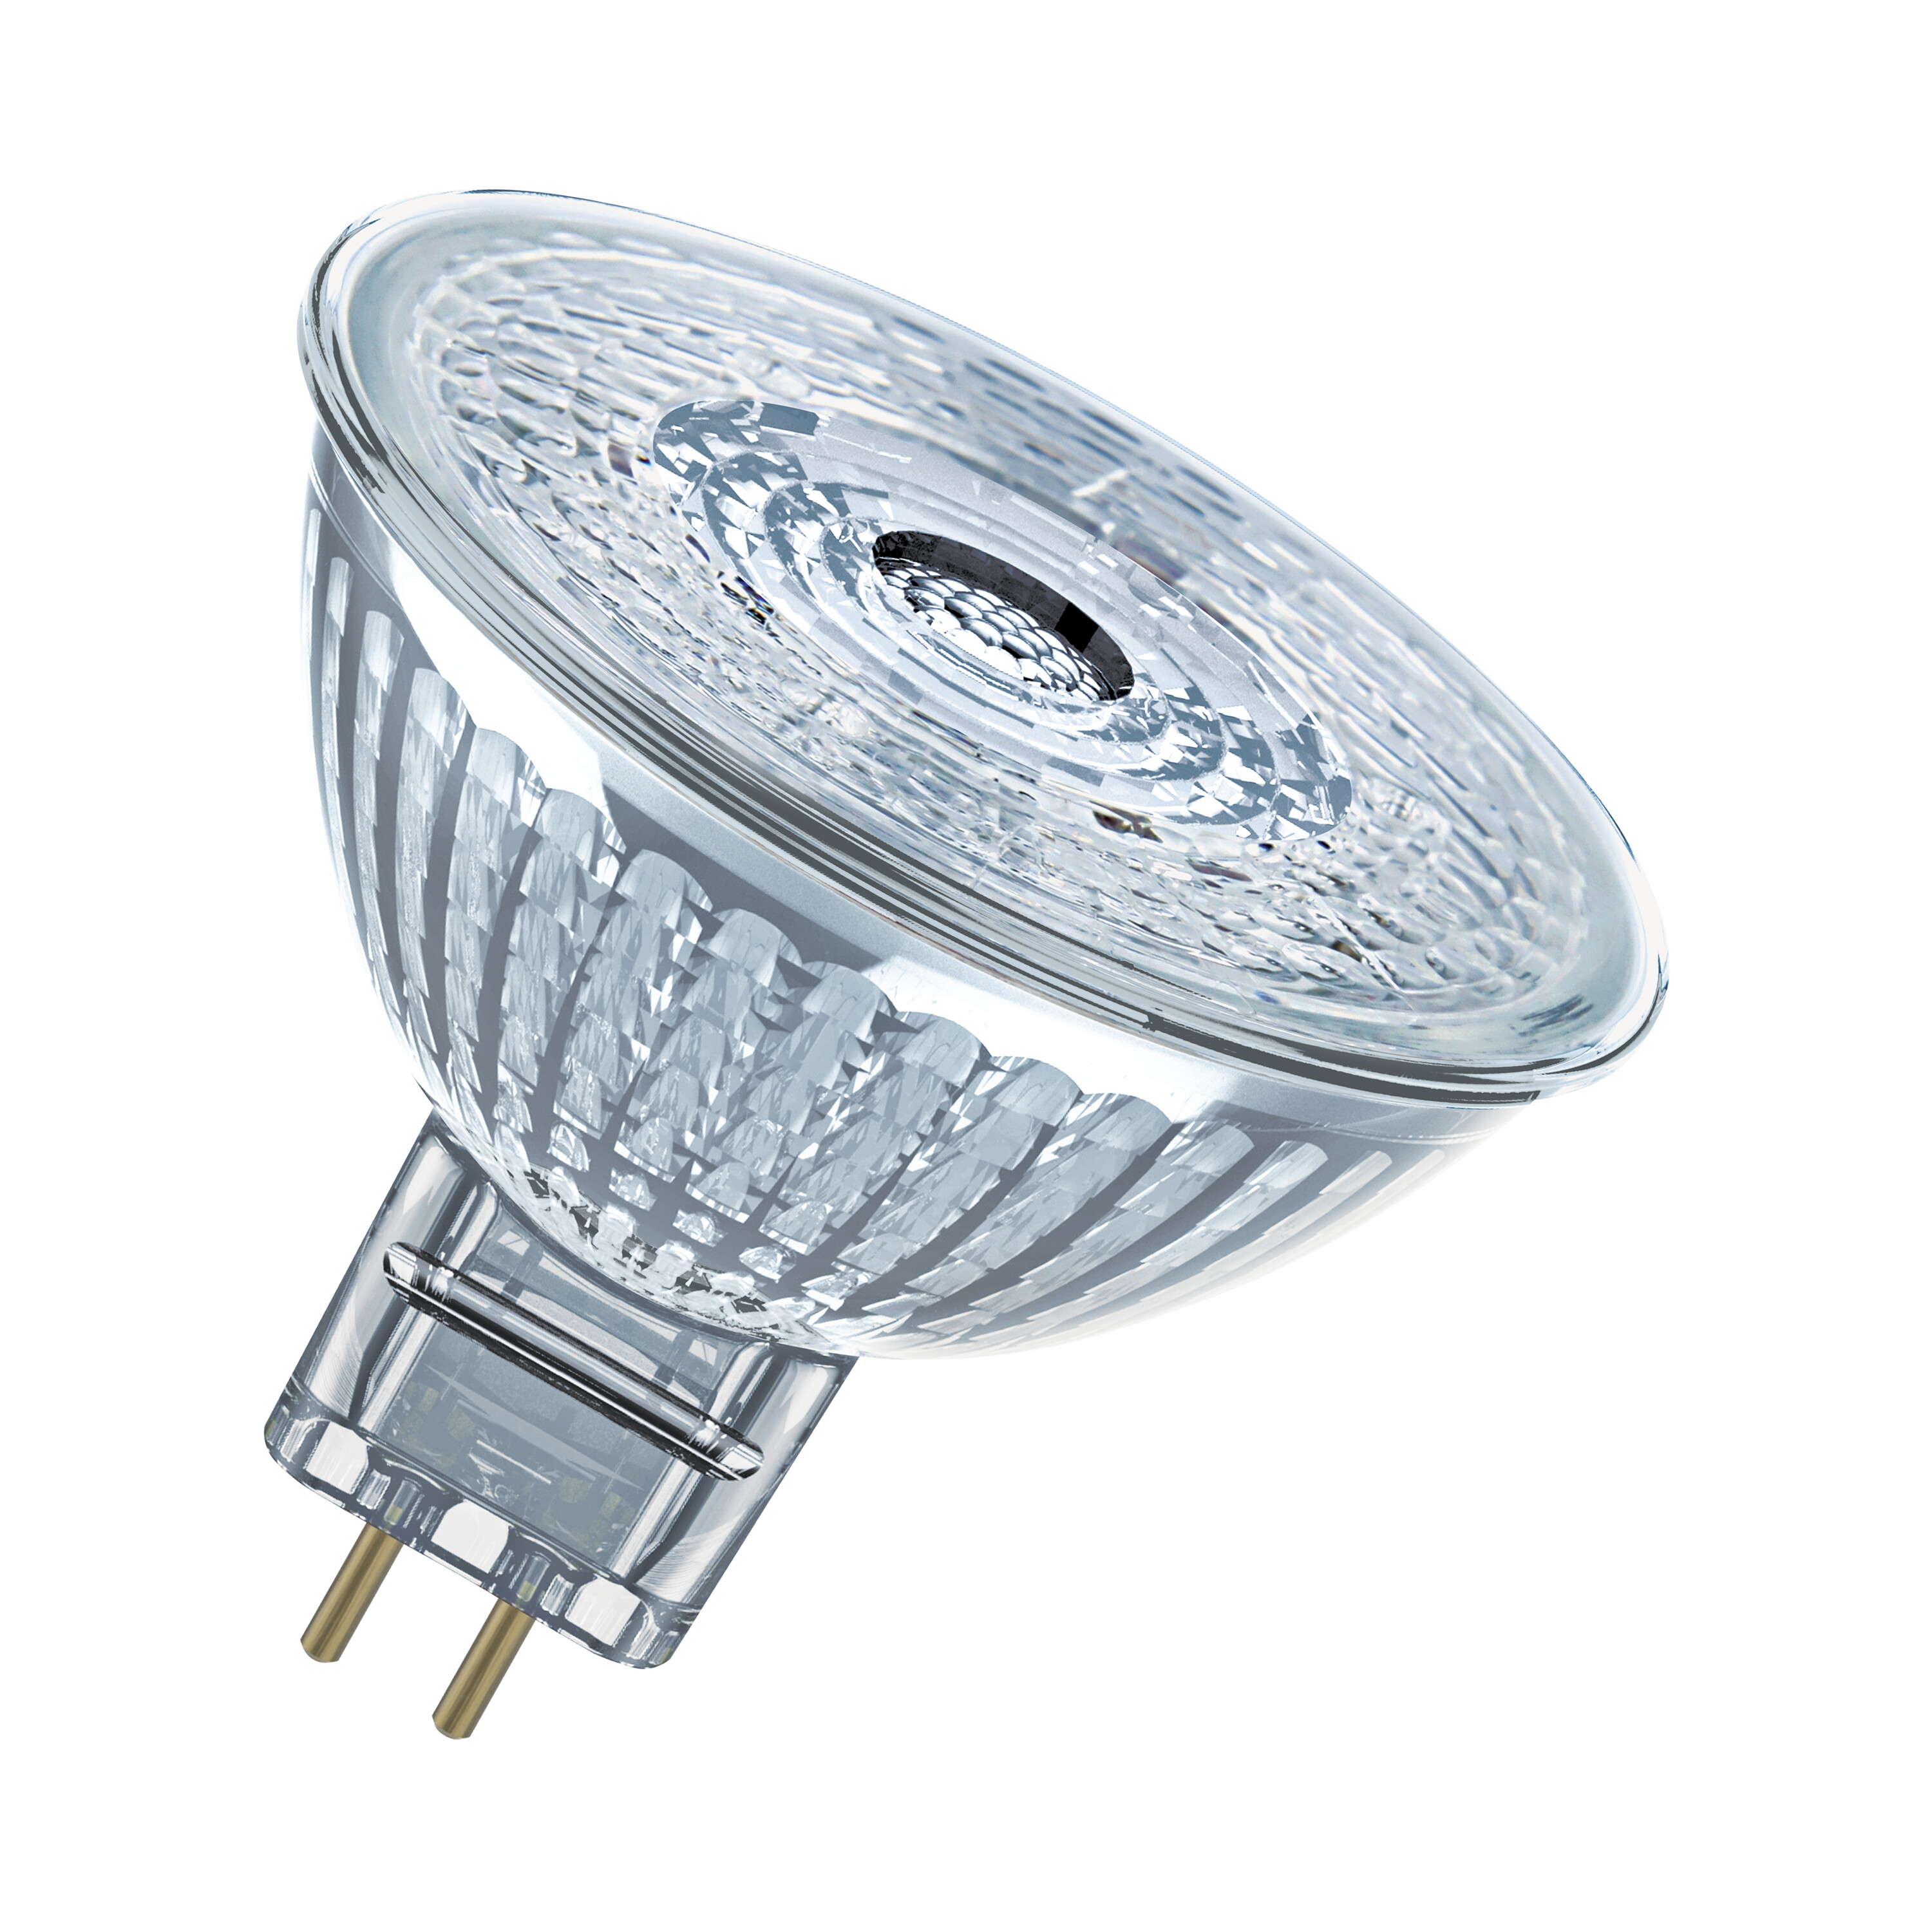 OSRAM  LED MR16 LED-Refektorlampe Kaltweiß STAR